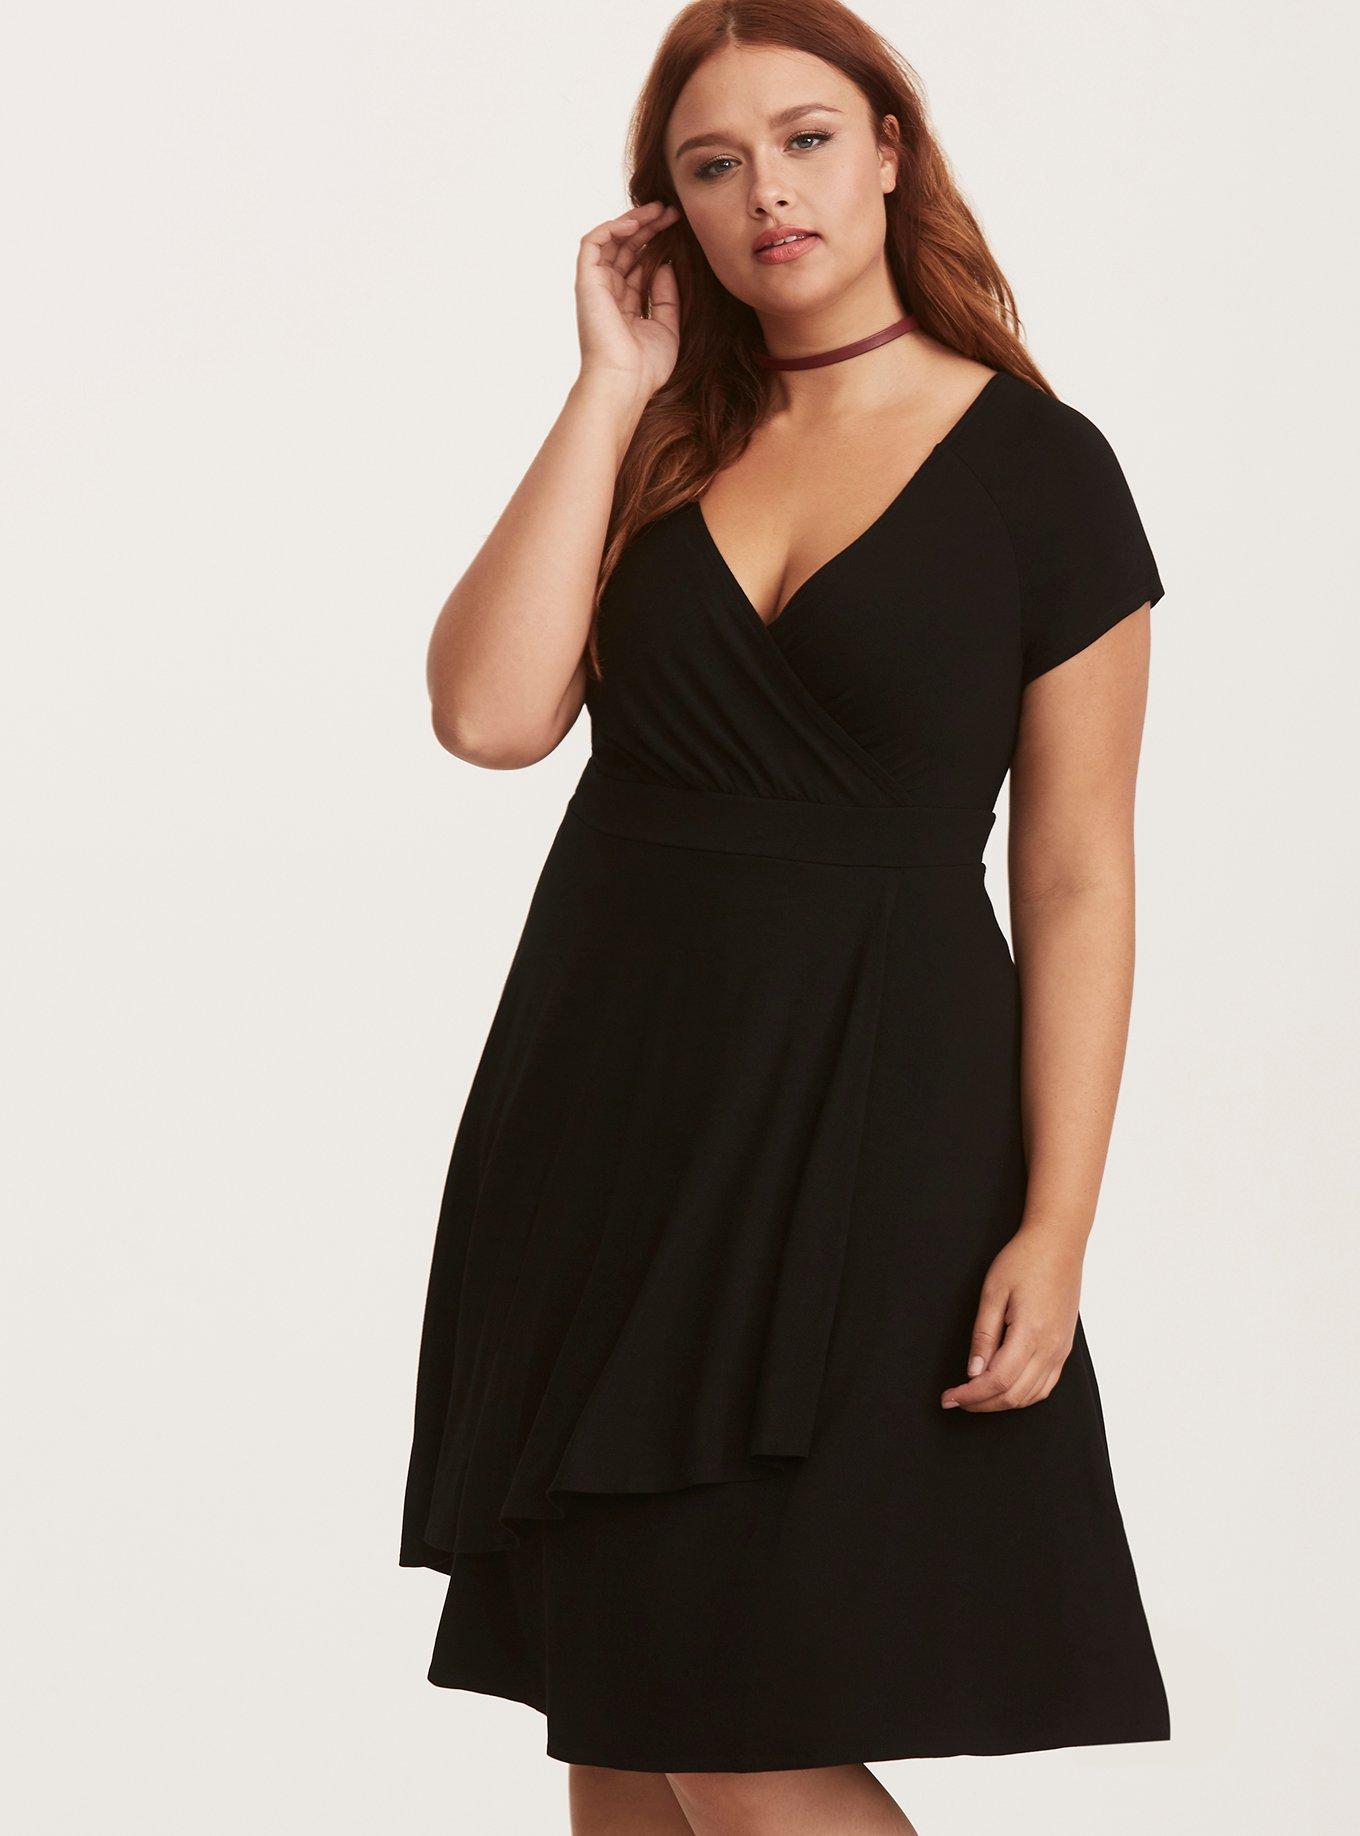 Plus Size - Black Jersey Faux Wrap Dress - Torrid